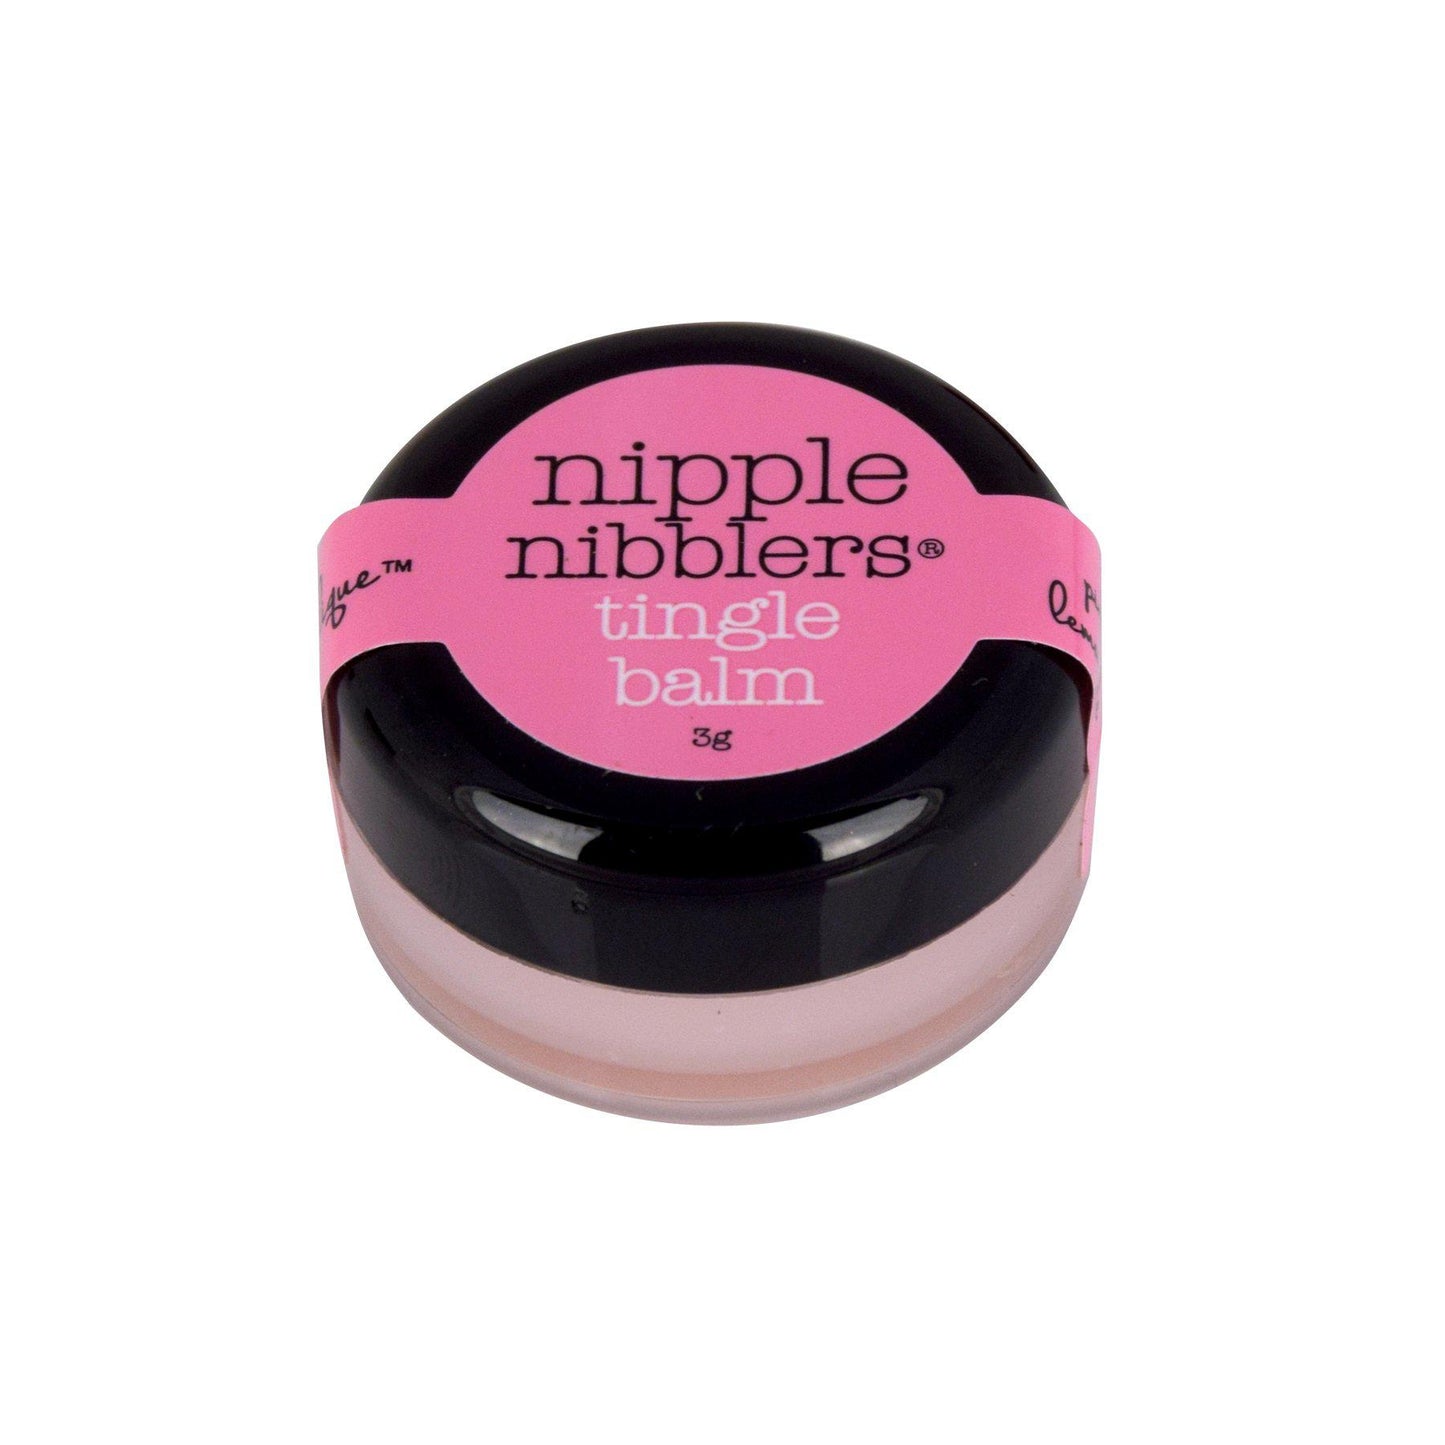 Nipple Nibblers Tingle Balm - Pink Lemonade - 3gm Jar JEL2503-05